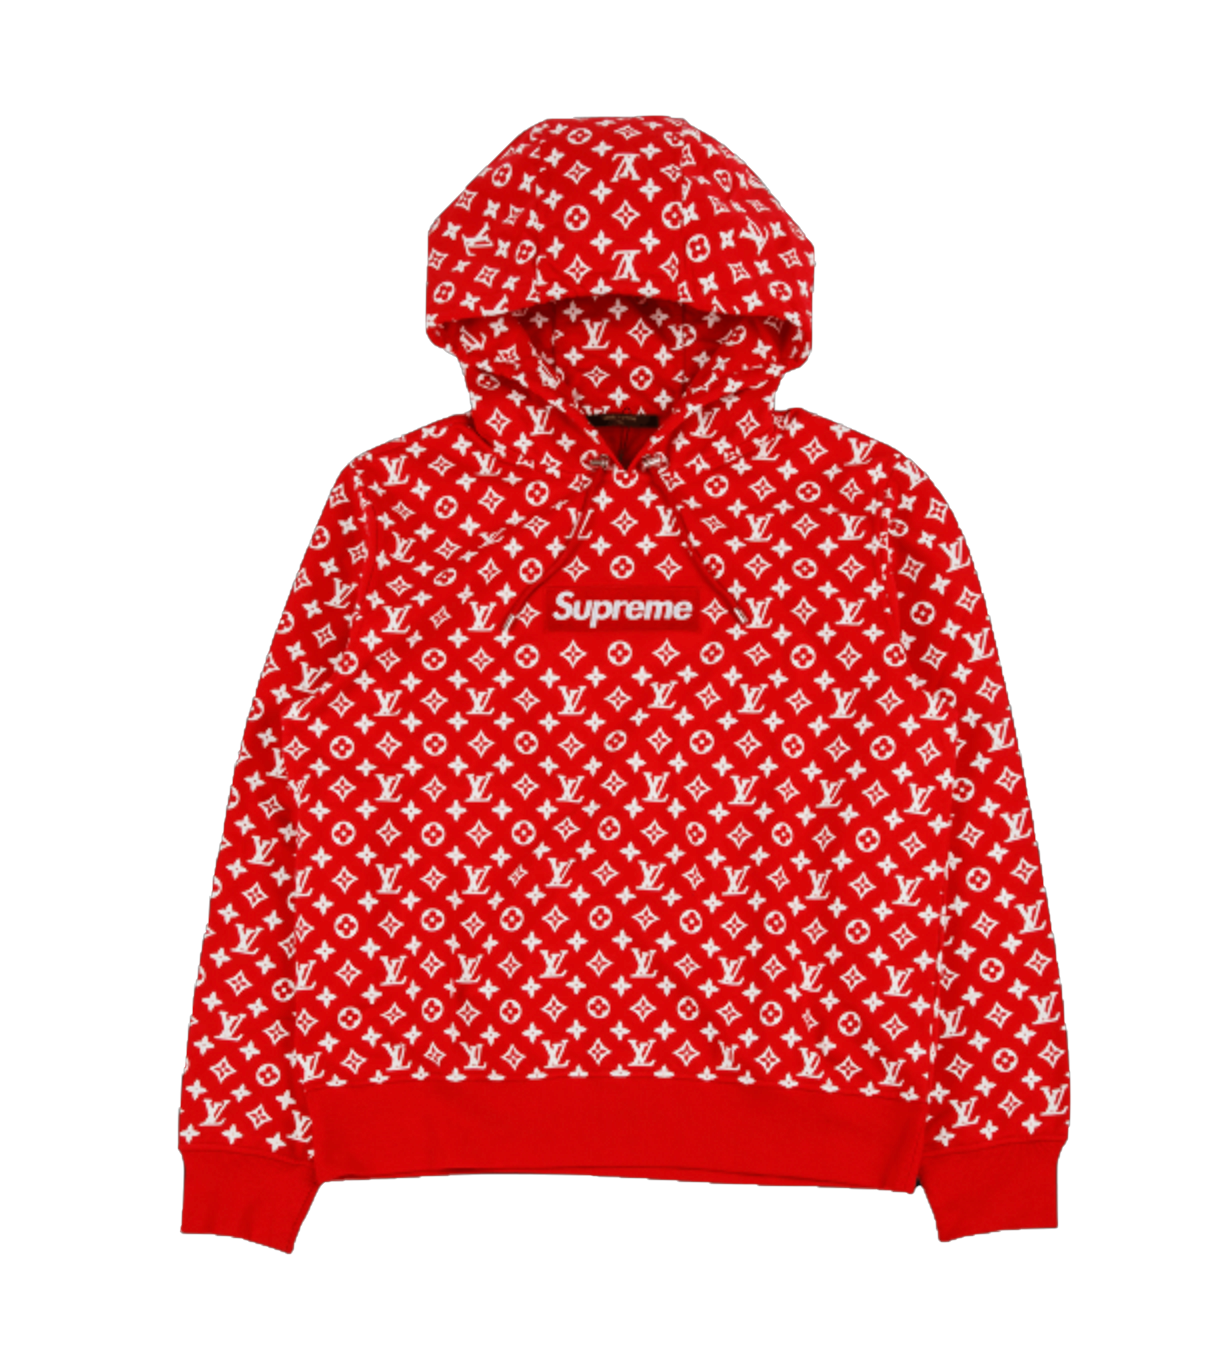 Supreme x Louis Vuitton Box Logo Hooded Sweatshirt Red sneaker informations